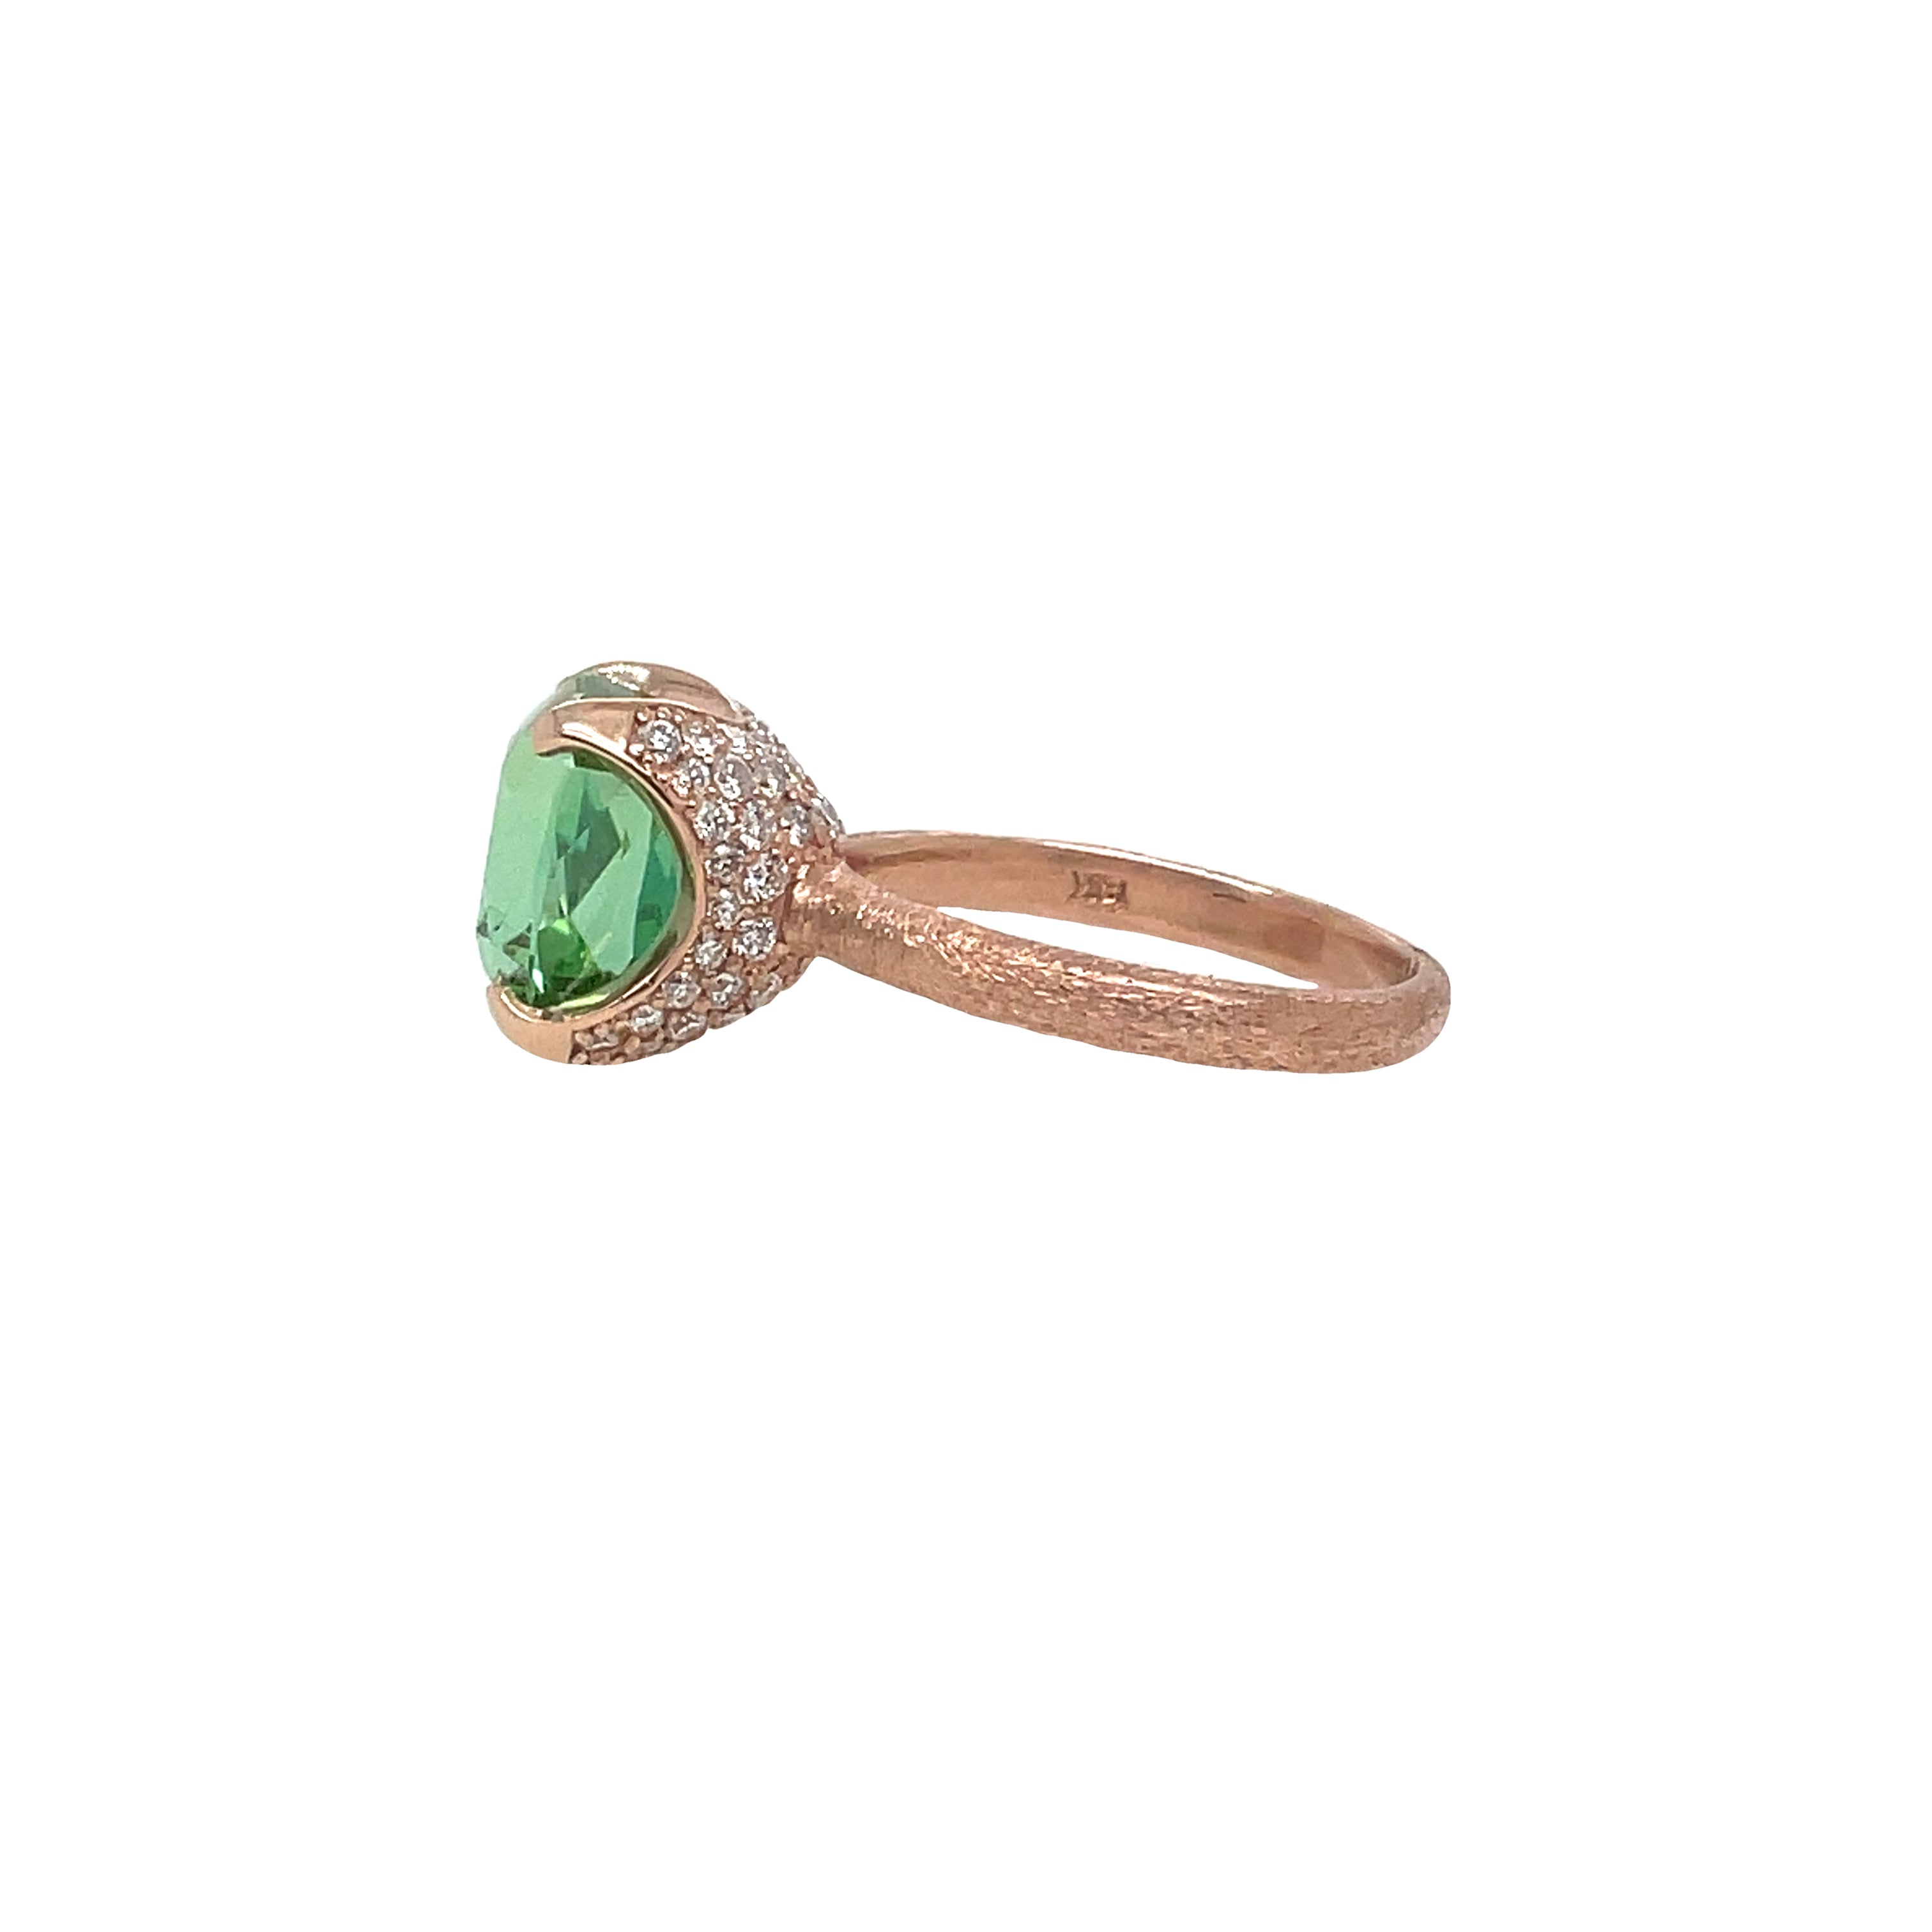 Exquisite Green Tourmaline Ring